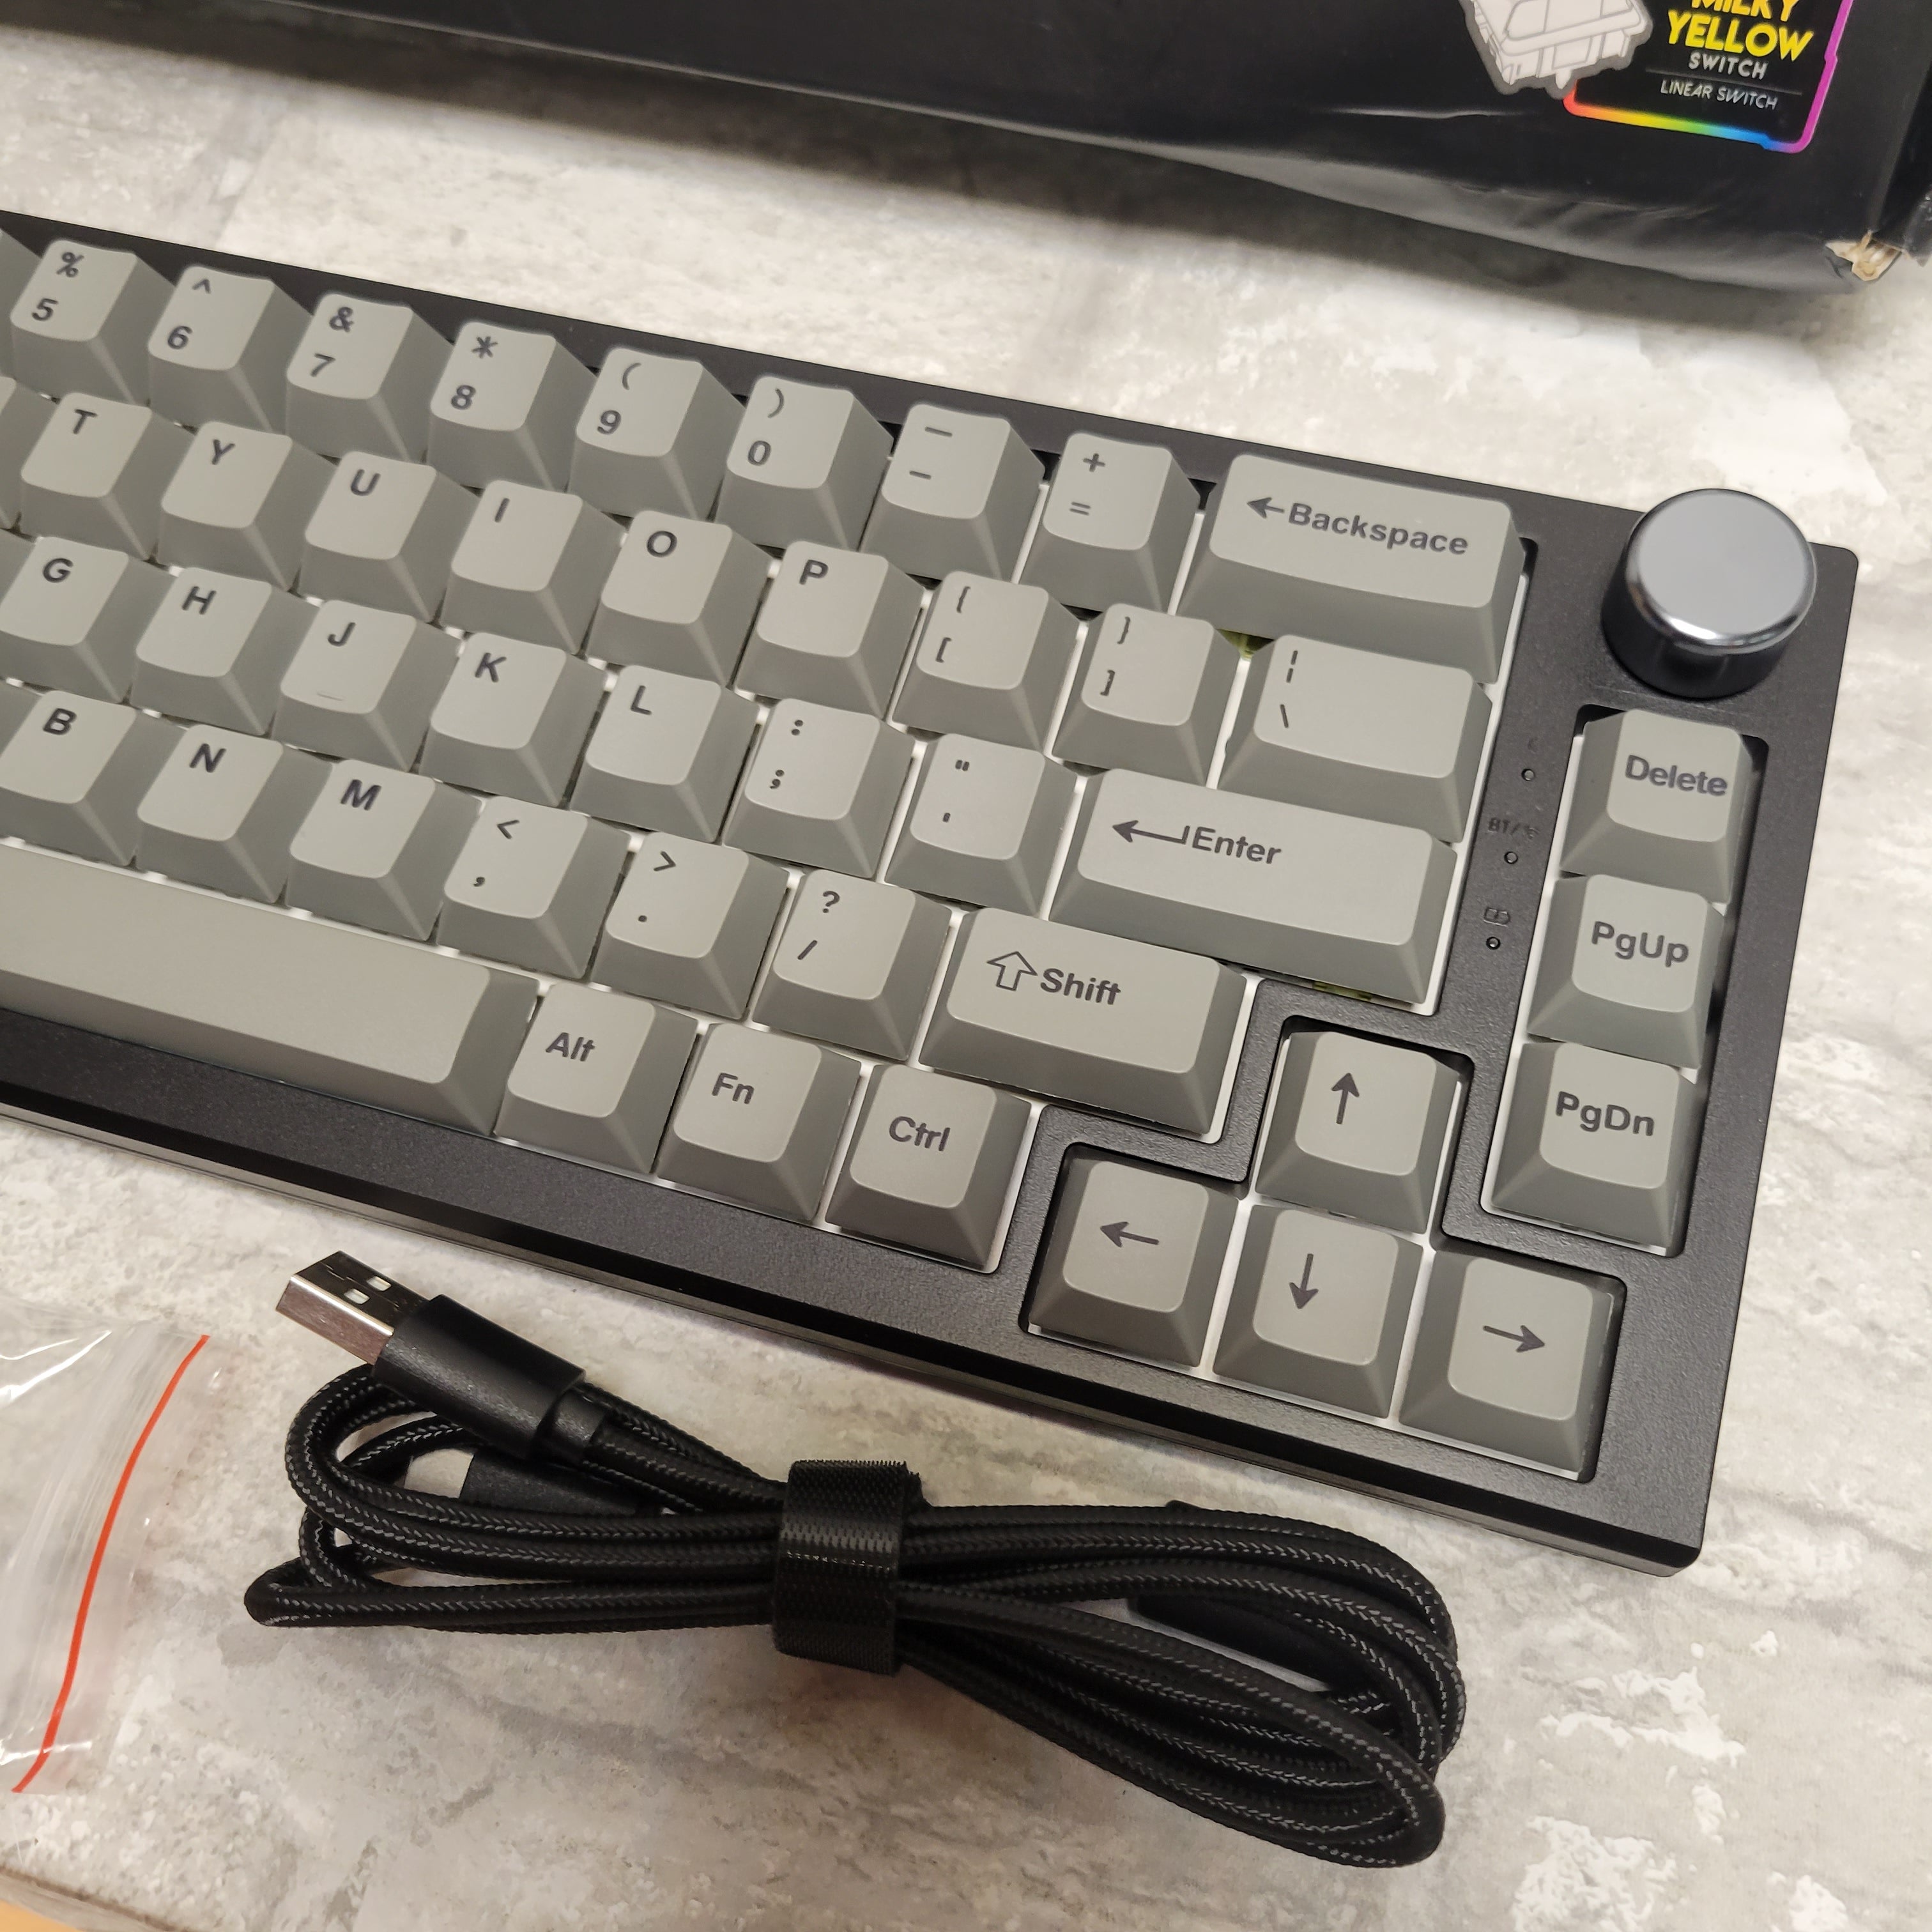 FANTECH MAXFIT67 3-Mode Custom Mechanical Gaming Keyboard (8075826299118)